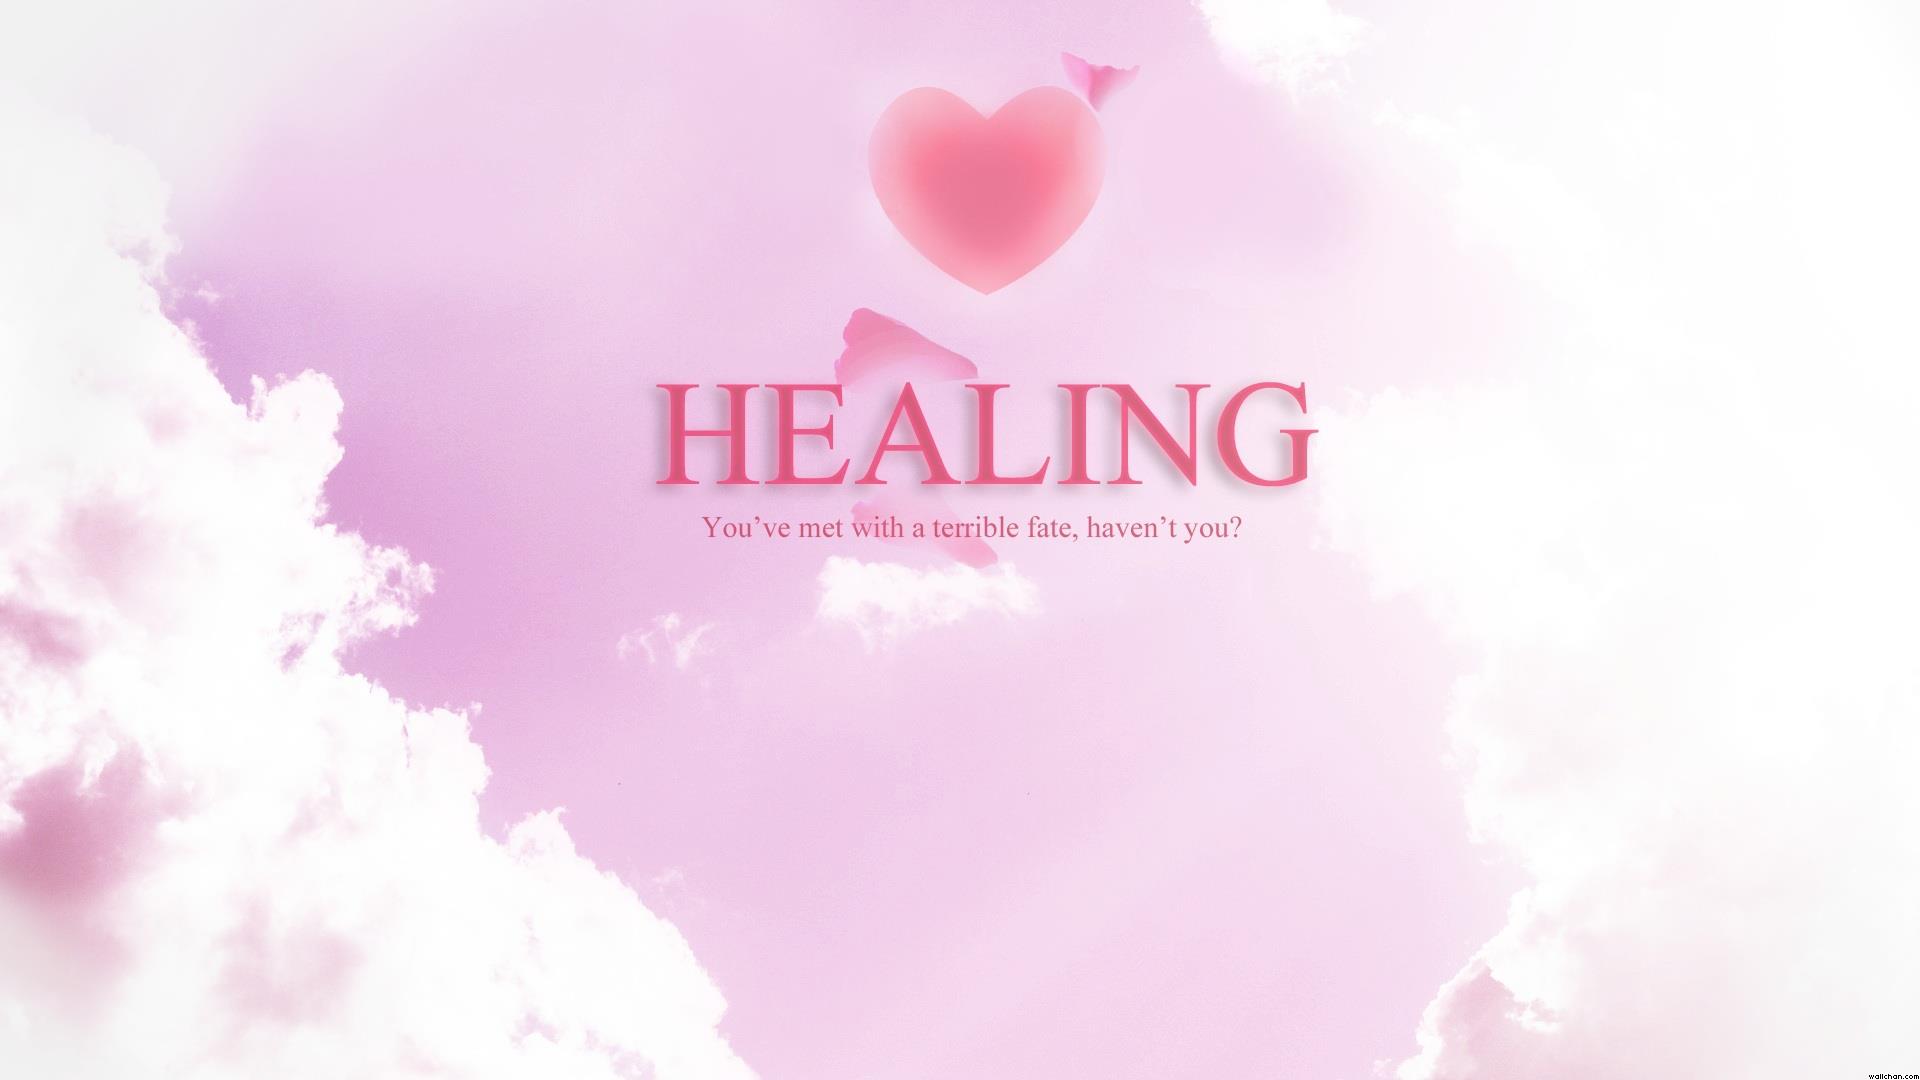 Song of Healing by Paridox